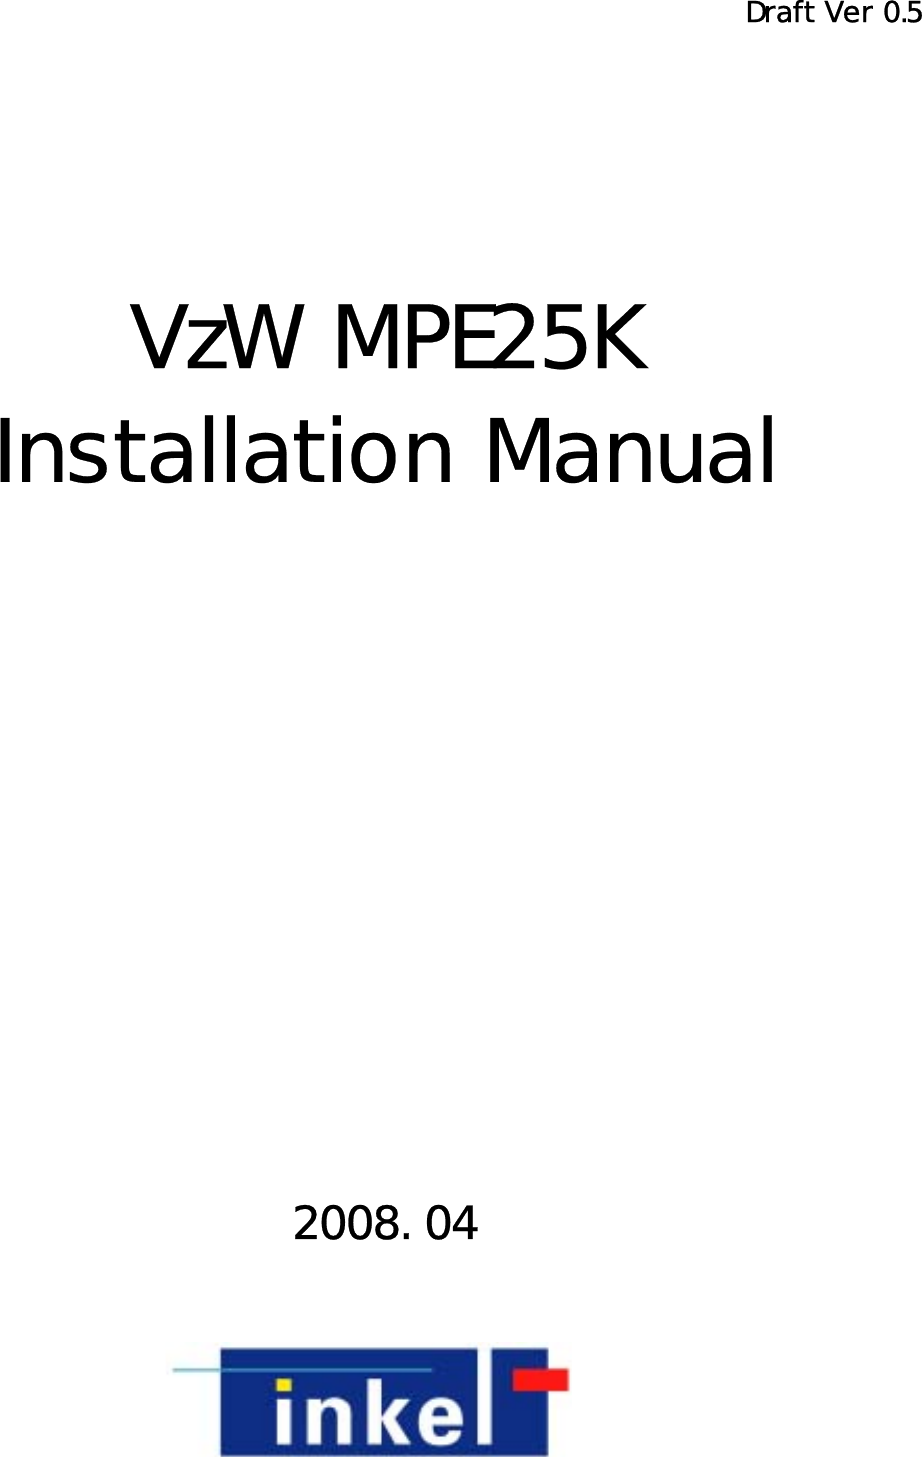                          VzW MPE25K  Installation Manual 2008. 04 Draft Ver 0.5